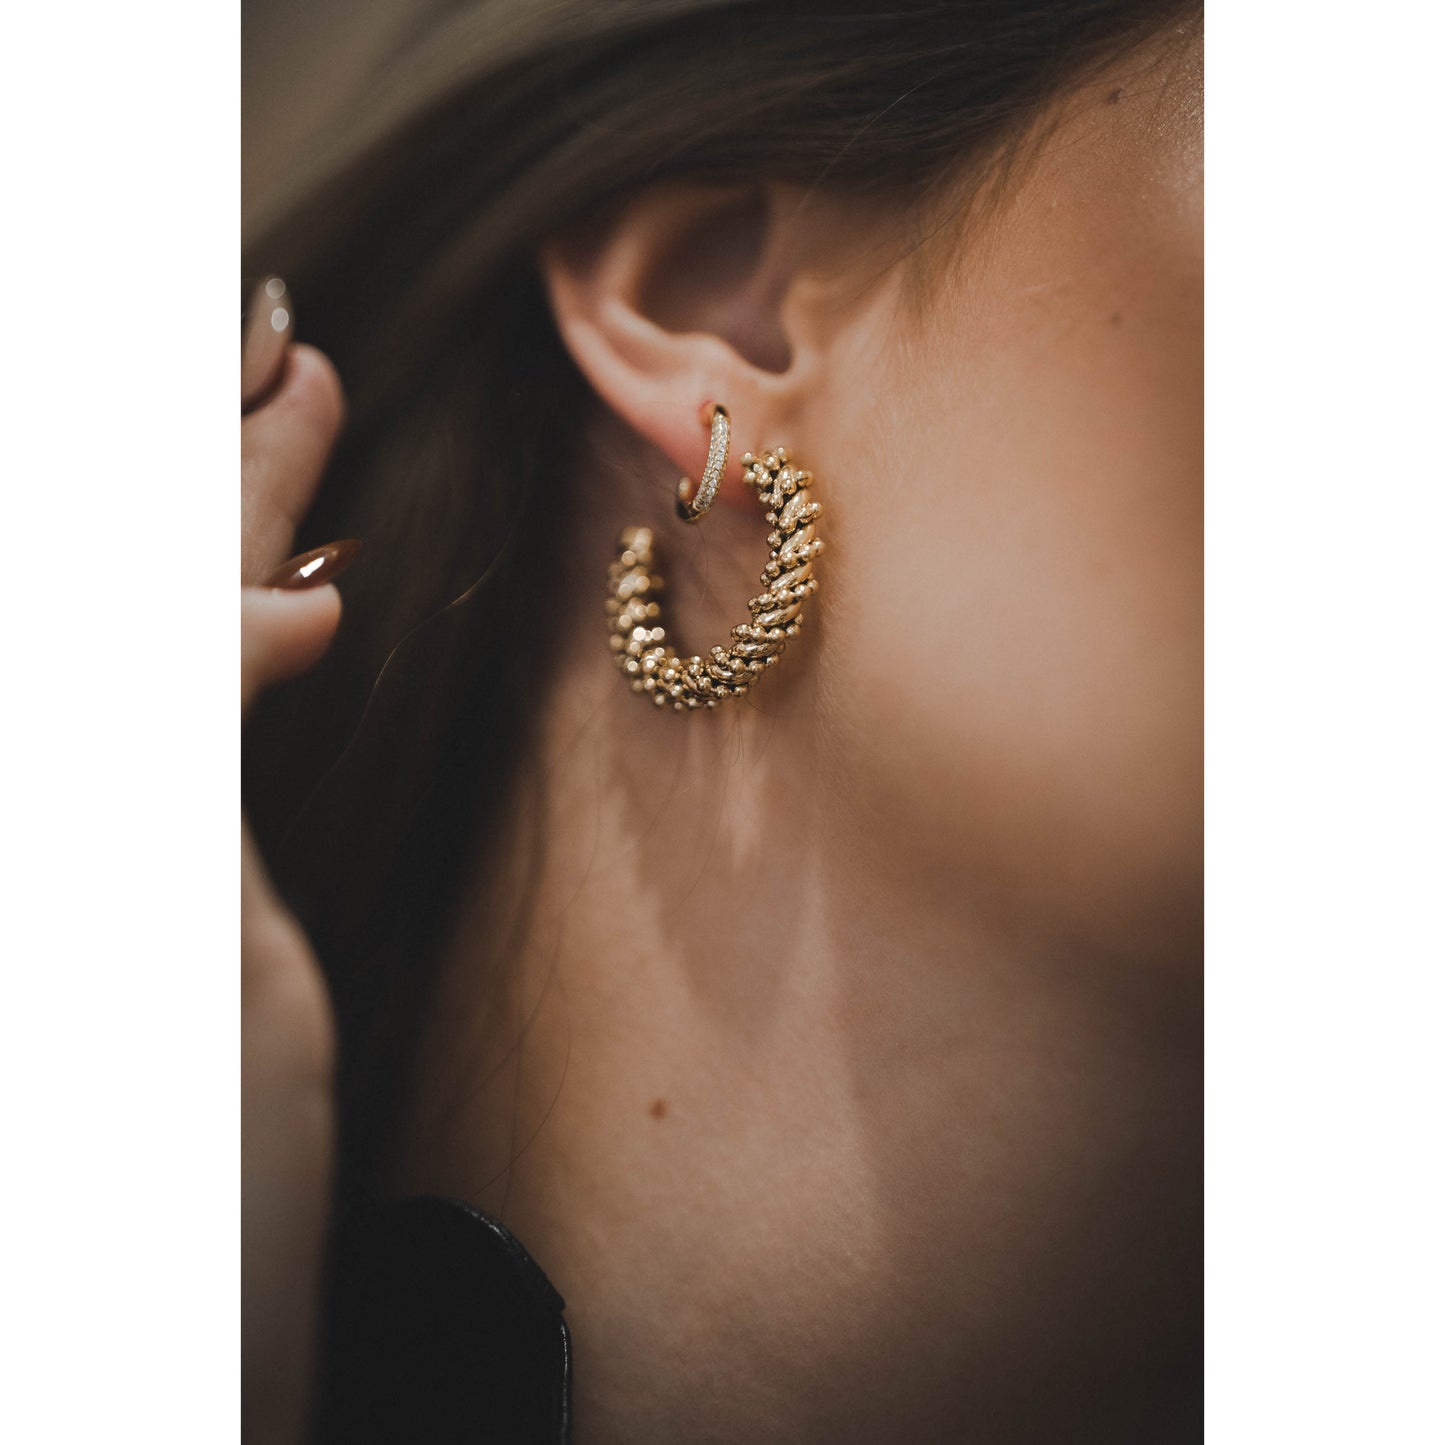 Azure Ohrringe Yasemen Store Schmuck Accessoires Edelstahl Stainless Steel 14K Vergoldet Gold jewel jewelry earring